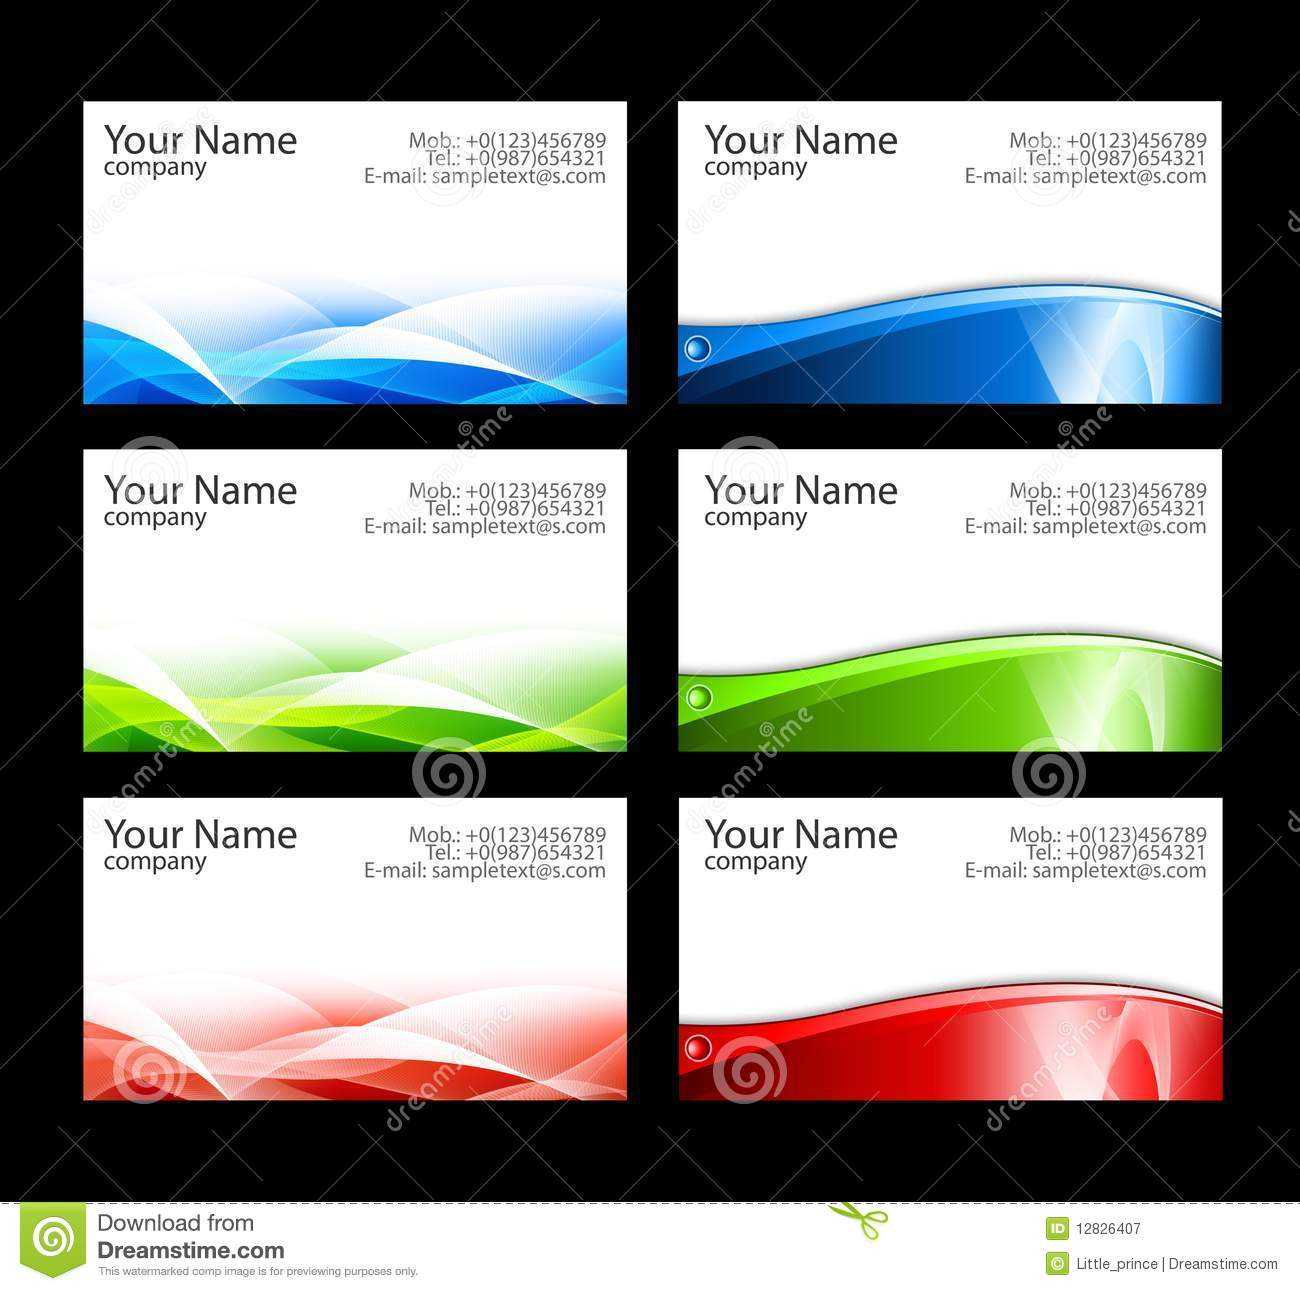 Free Calling Card Template Download – Tunu.redmini.co Regarding Microsoft Office Business Card Template